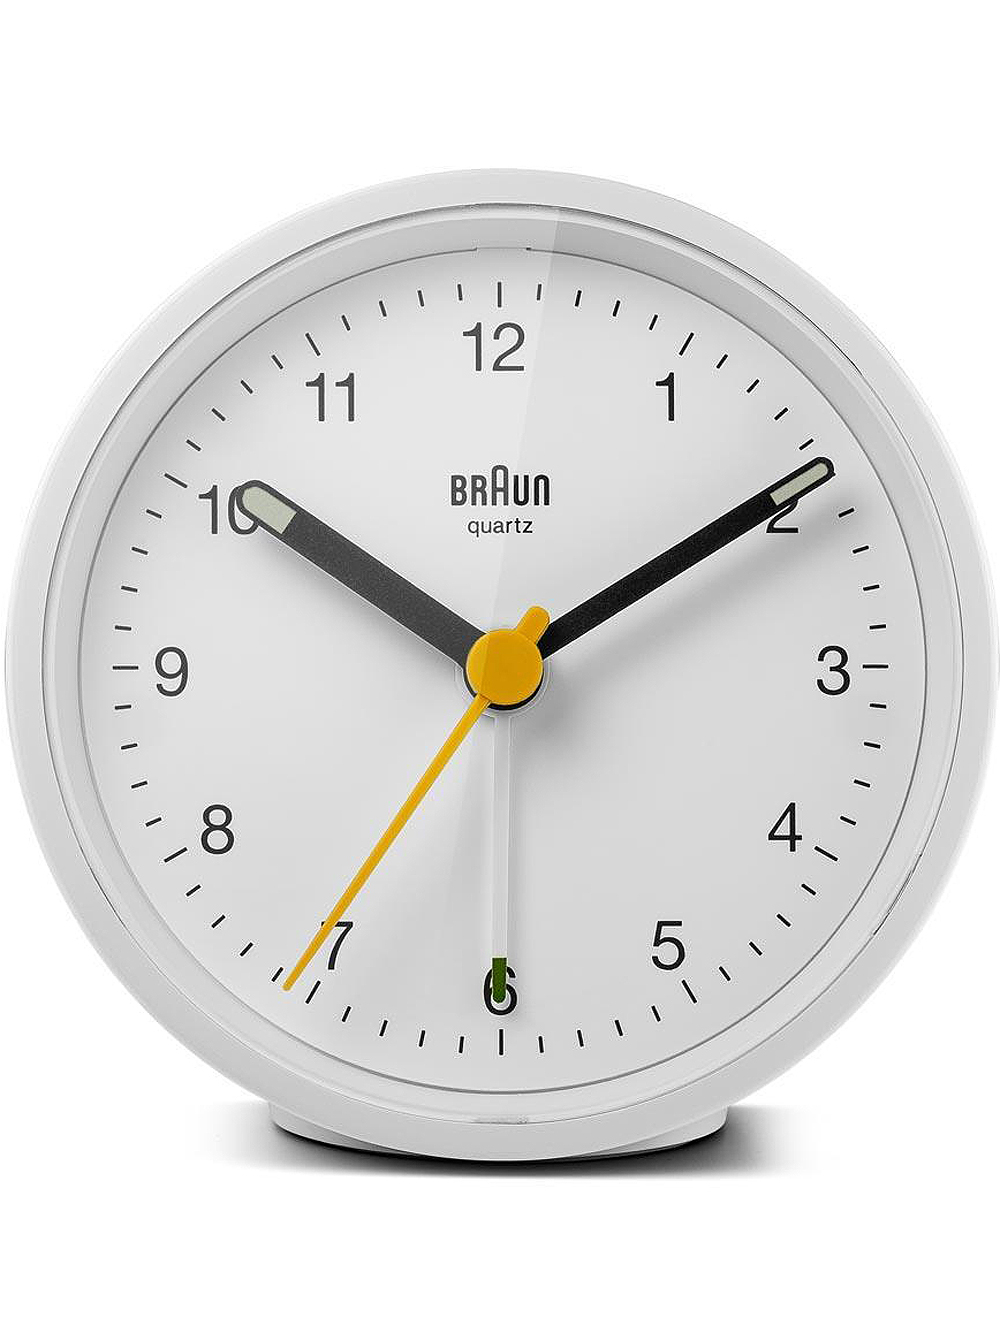 Reloj Braun Classic